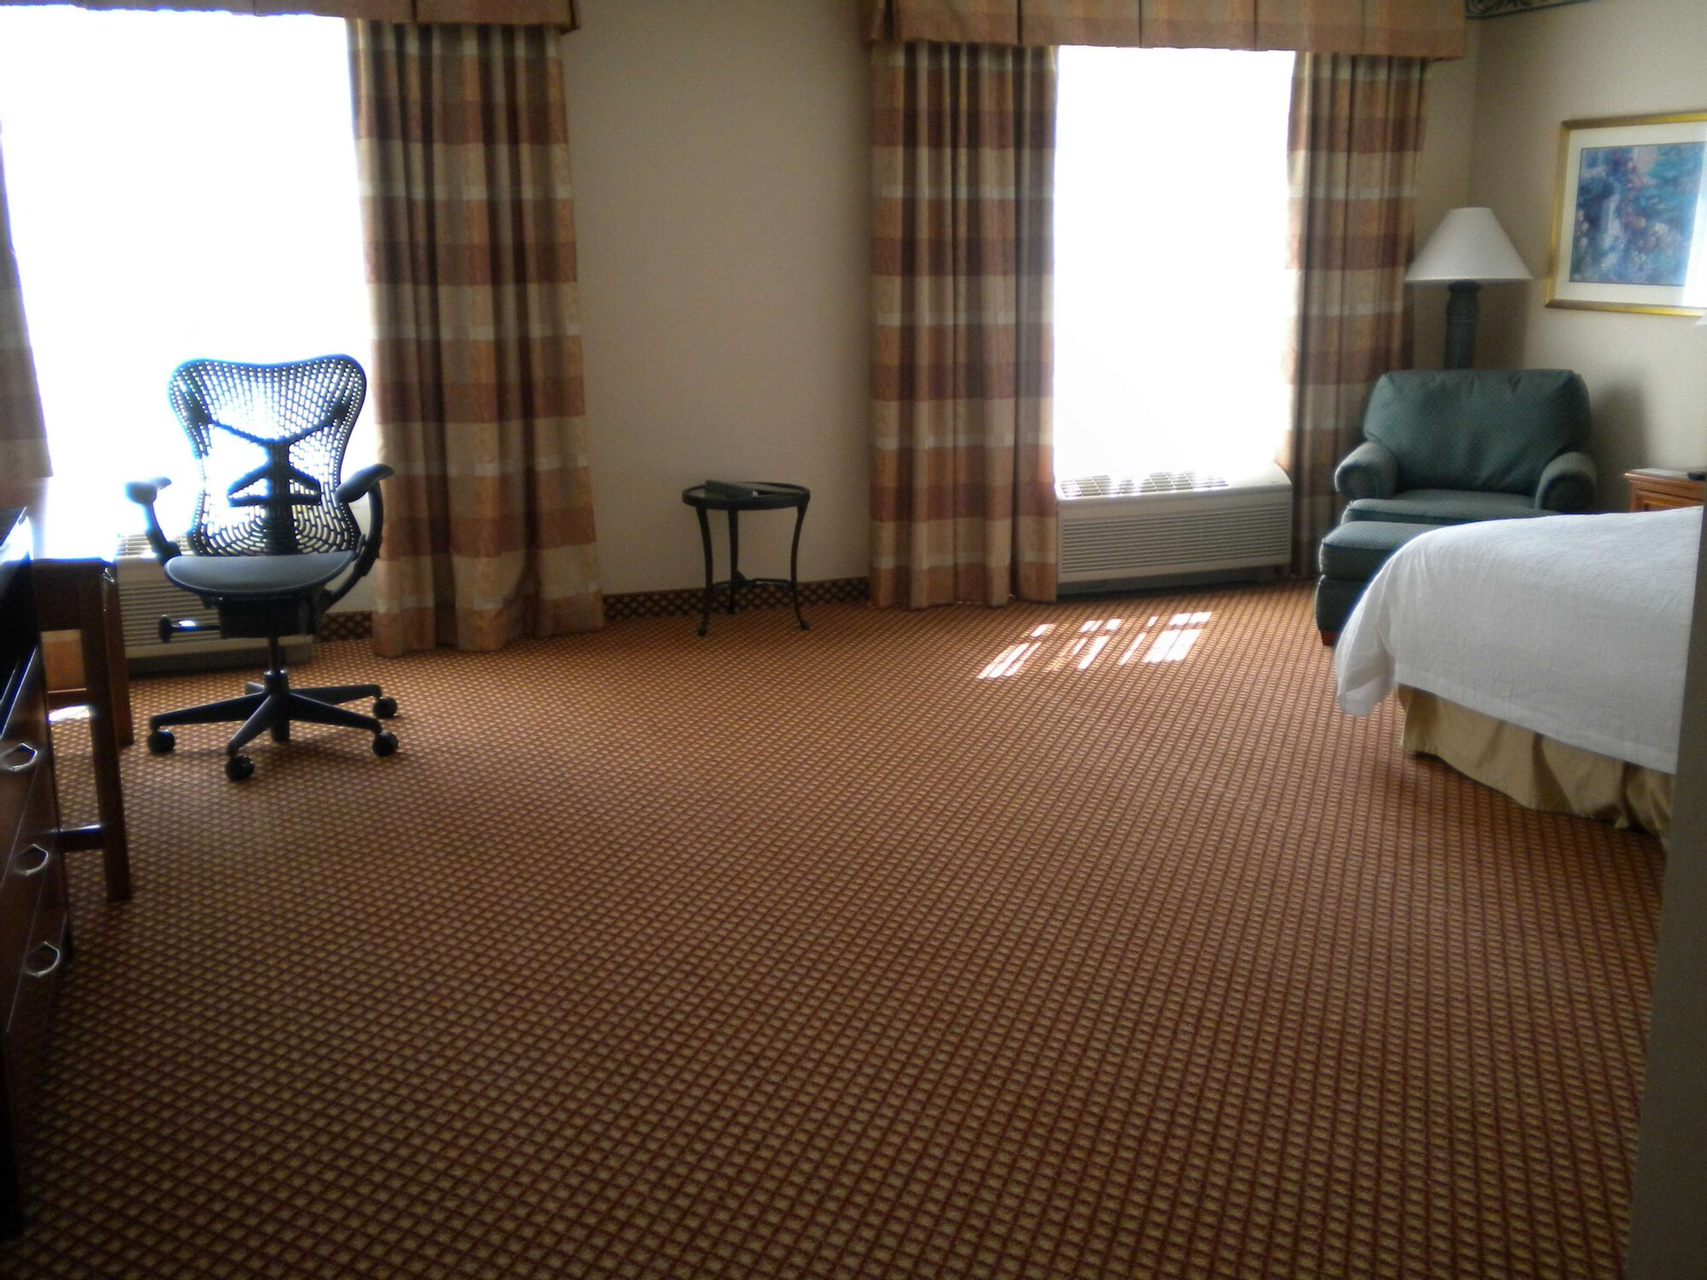 Bedroom 3, Hilton Garden Inn Williamsburg, Williamsburg